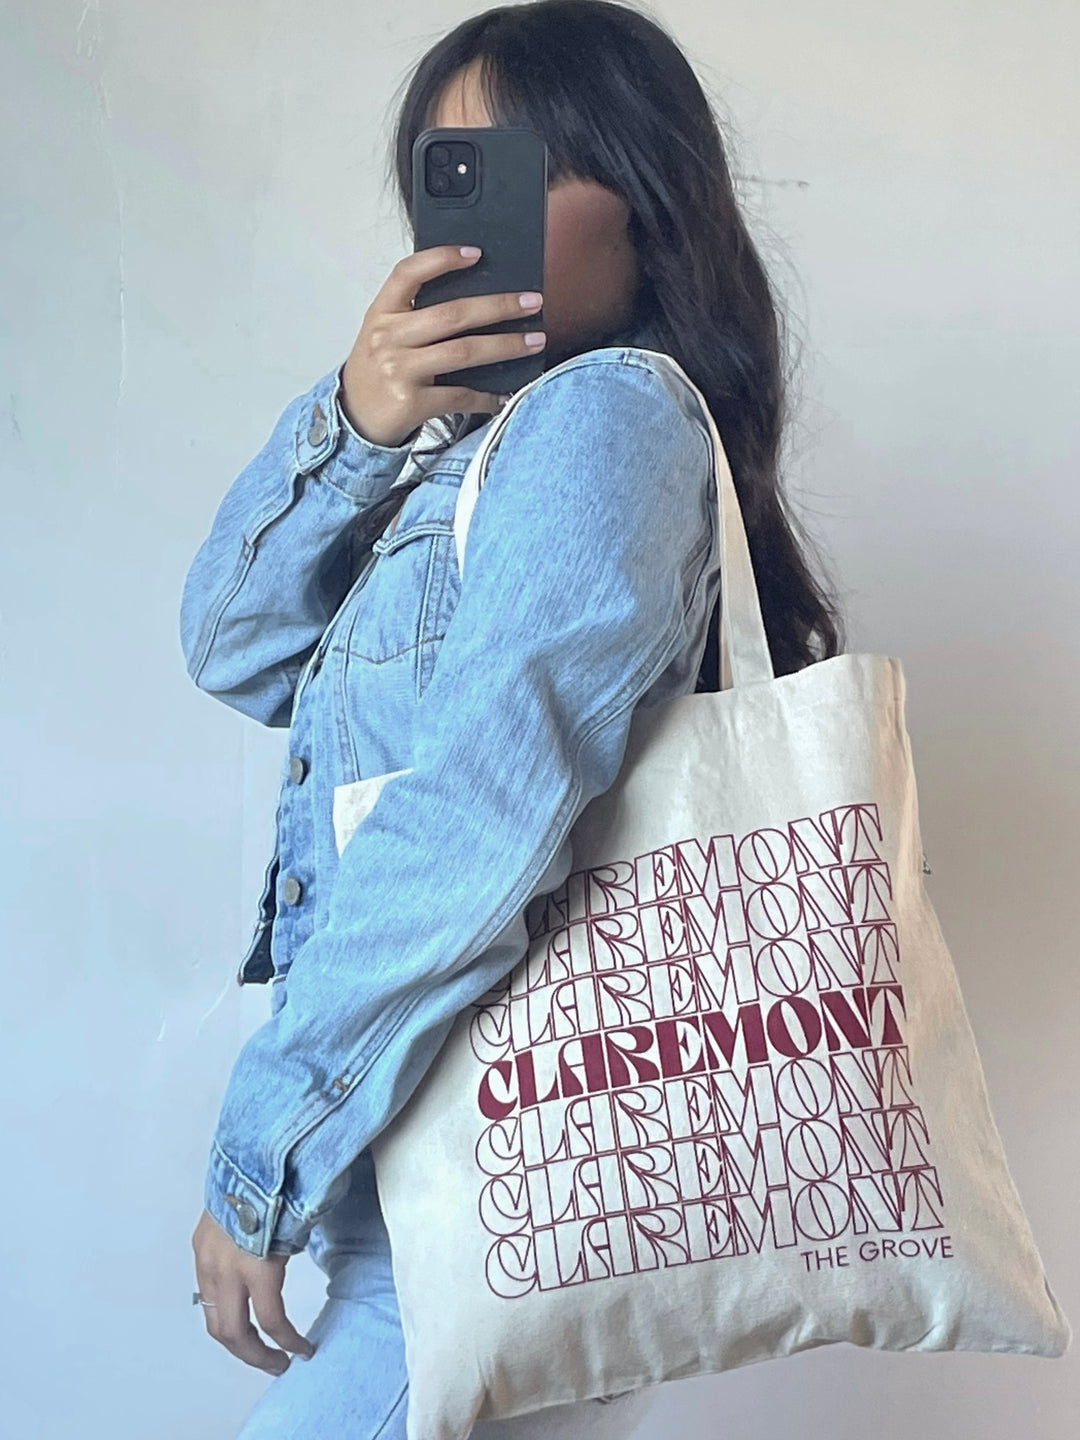 Claremont Tote Bag